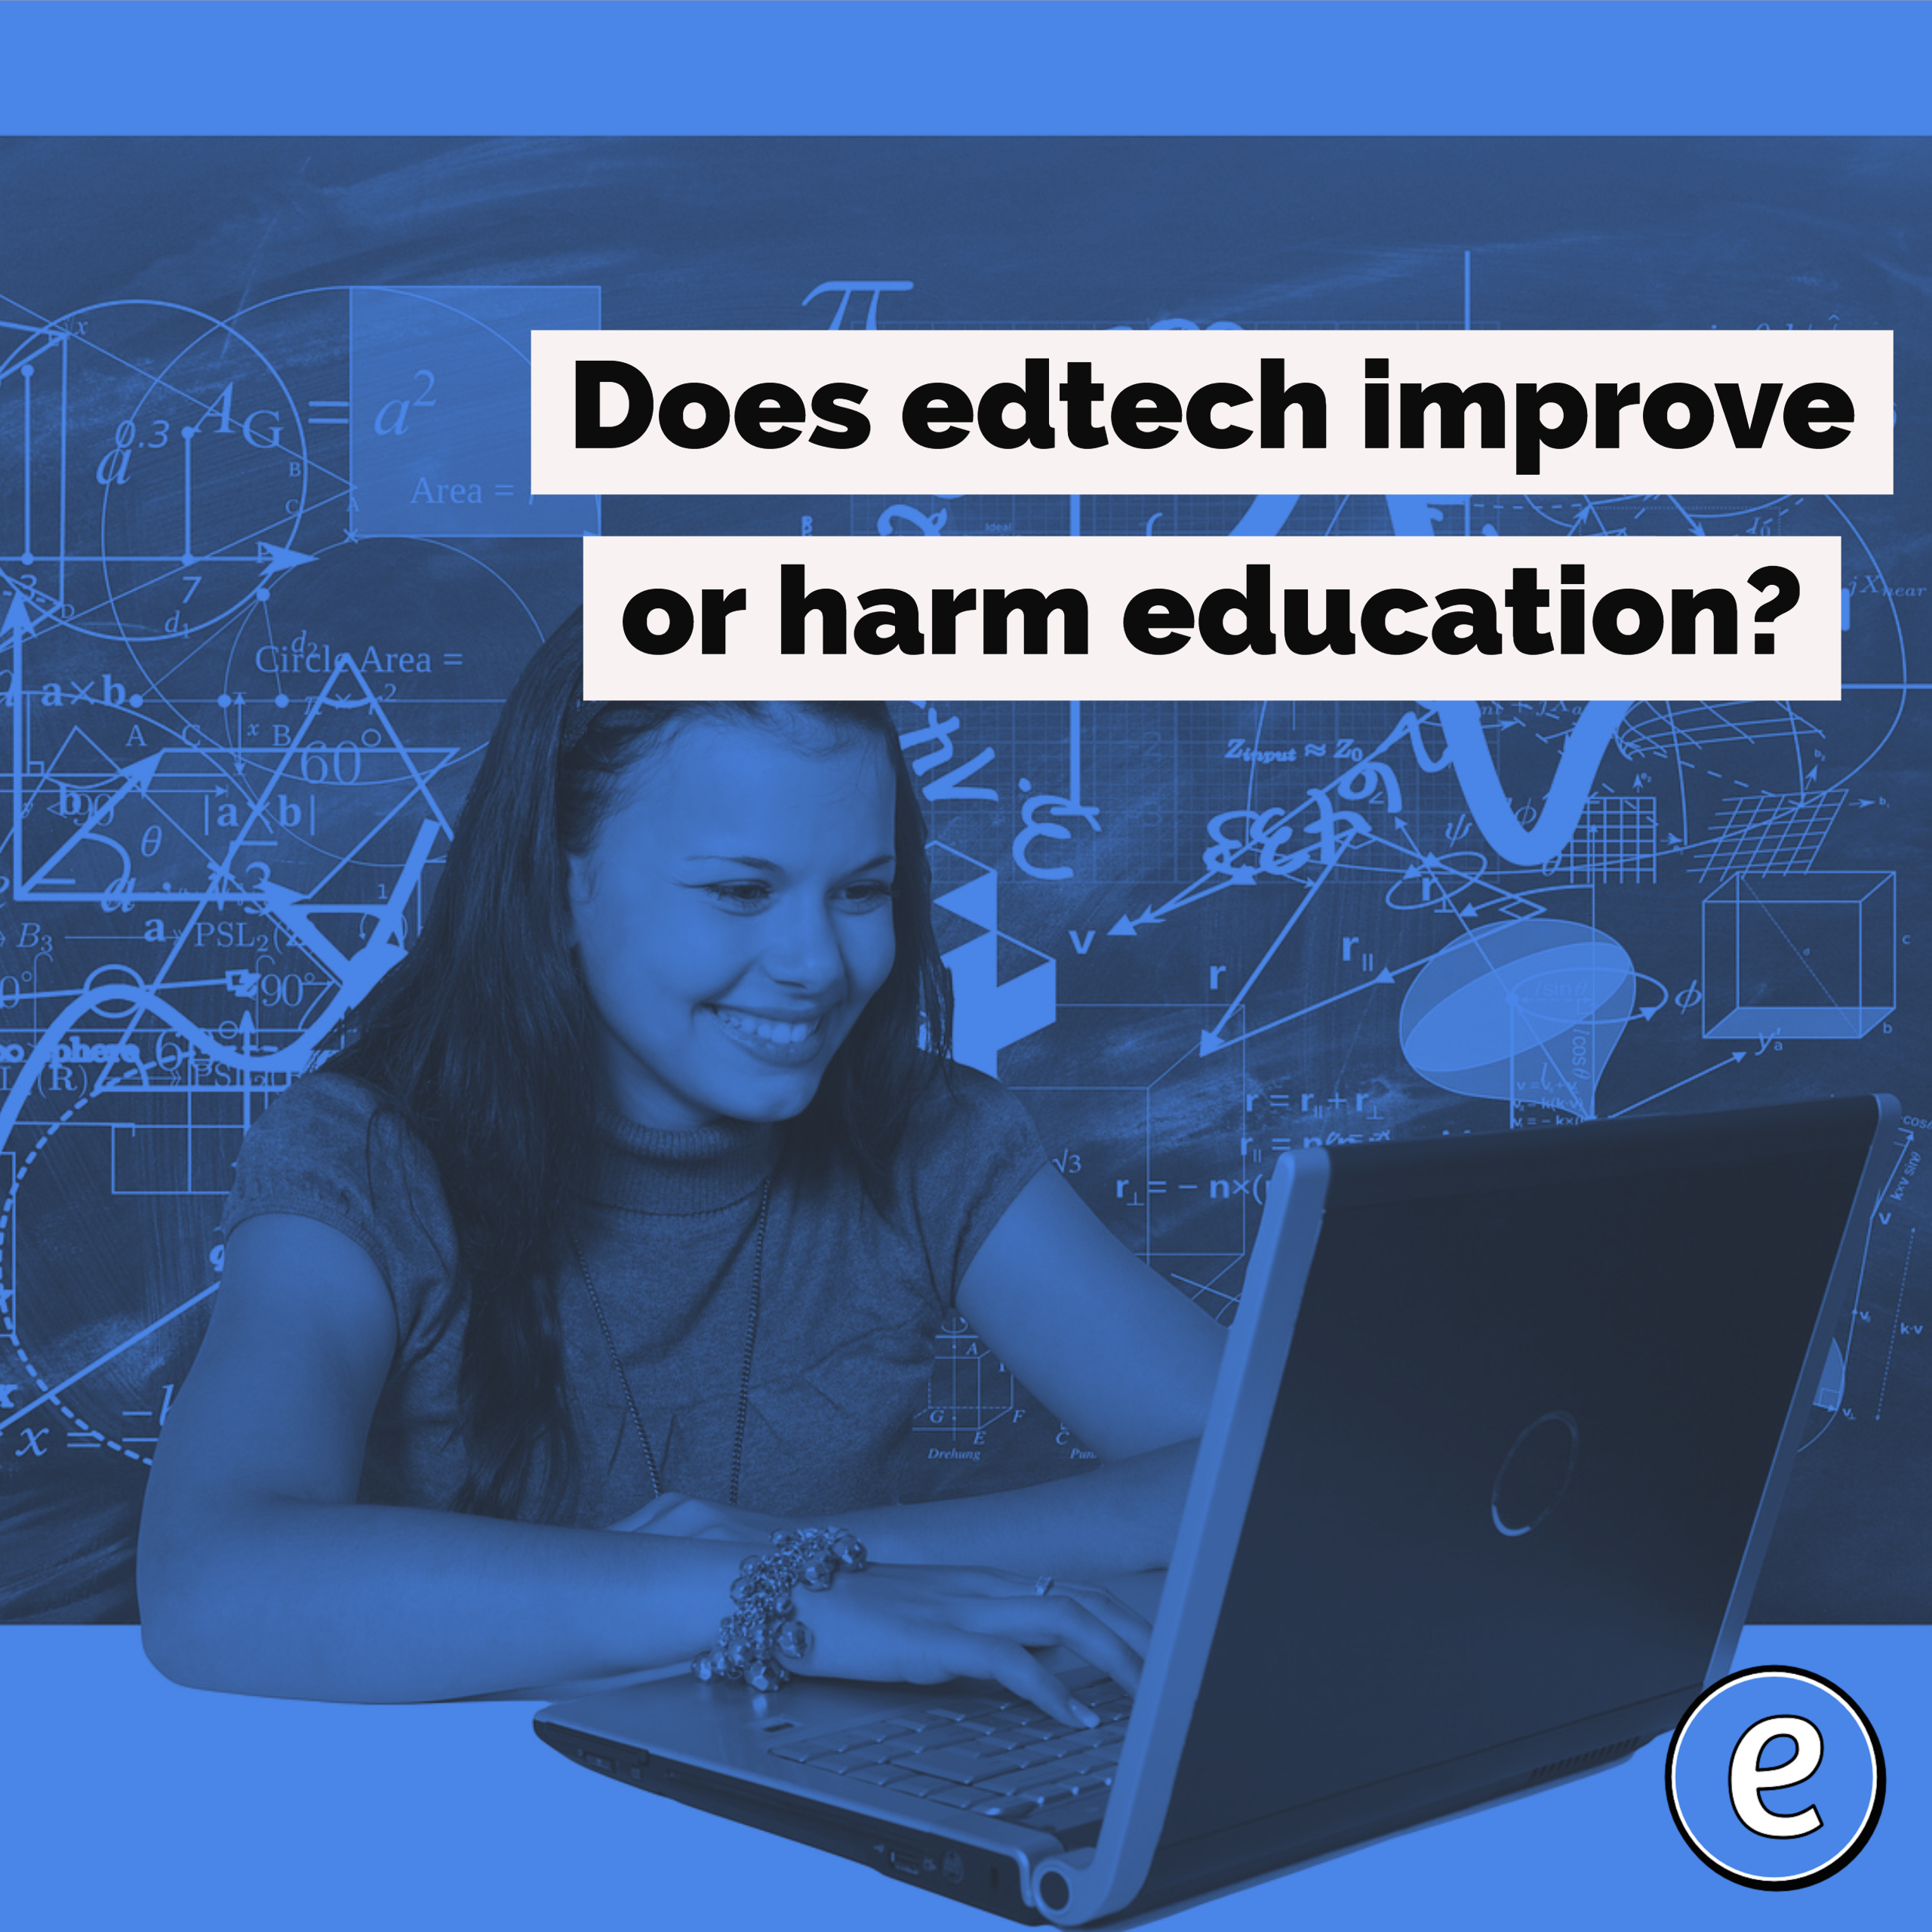 Does edtech improve or harm education?